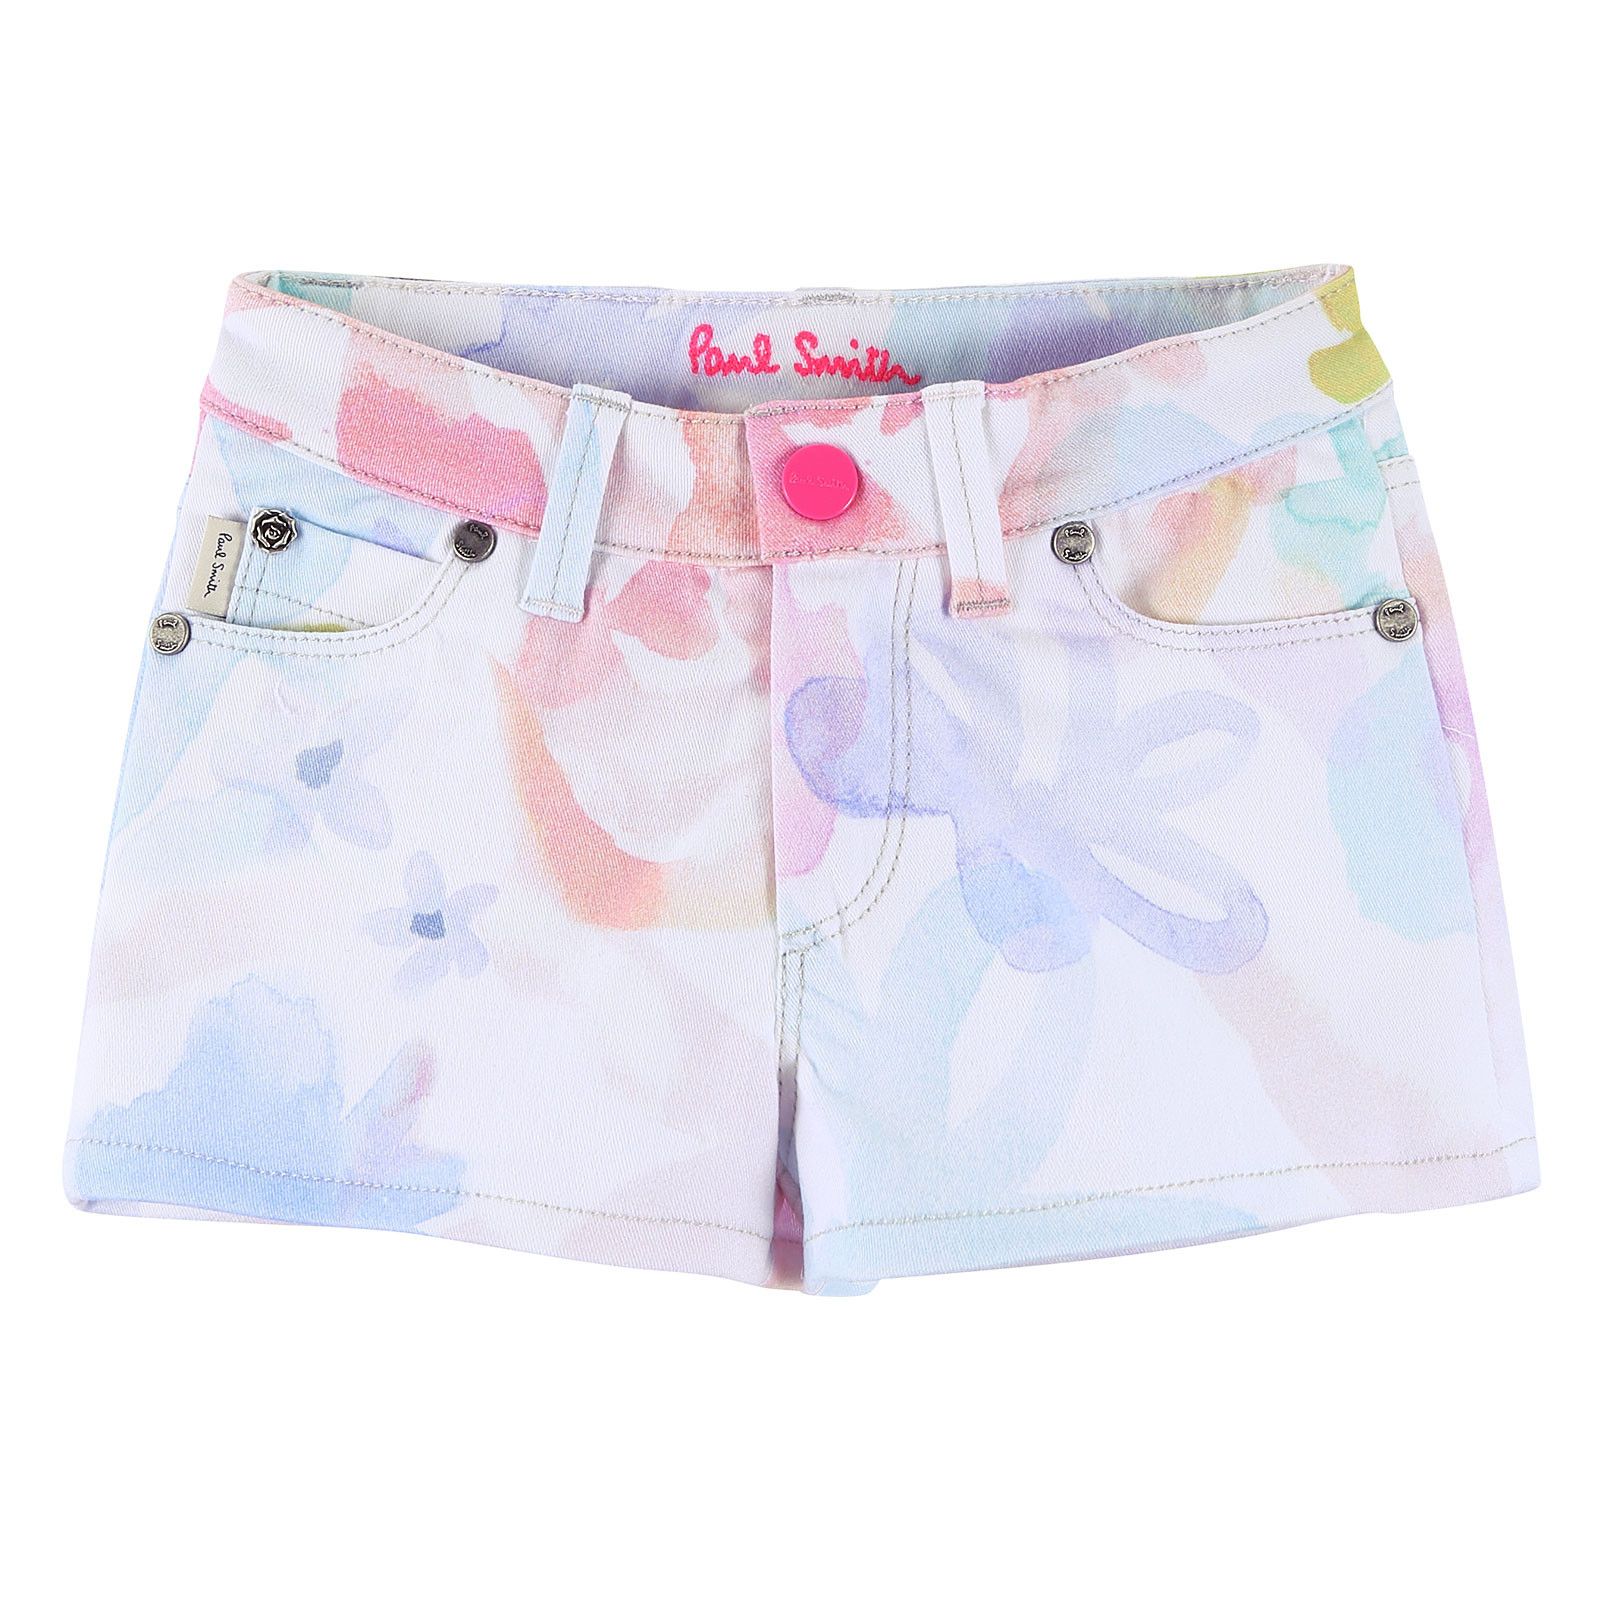 Girls White Cotton Short With Multicolor Print Trims - CÉMAROSE | Children's Fashion Store - 1